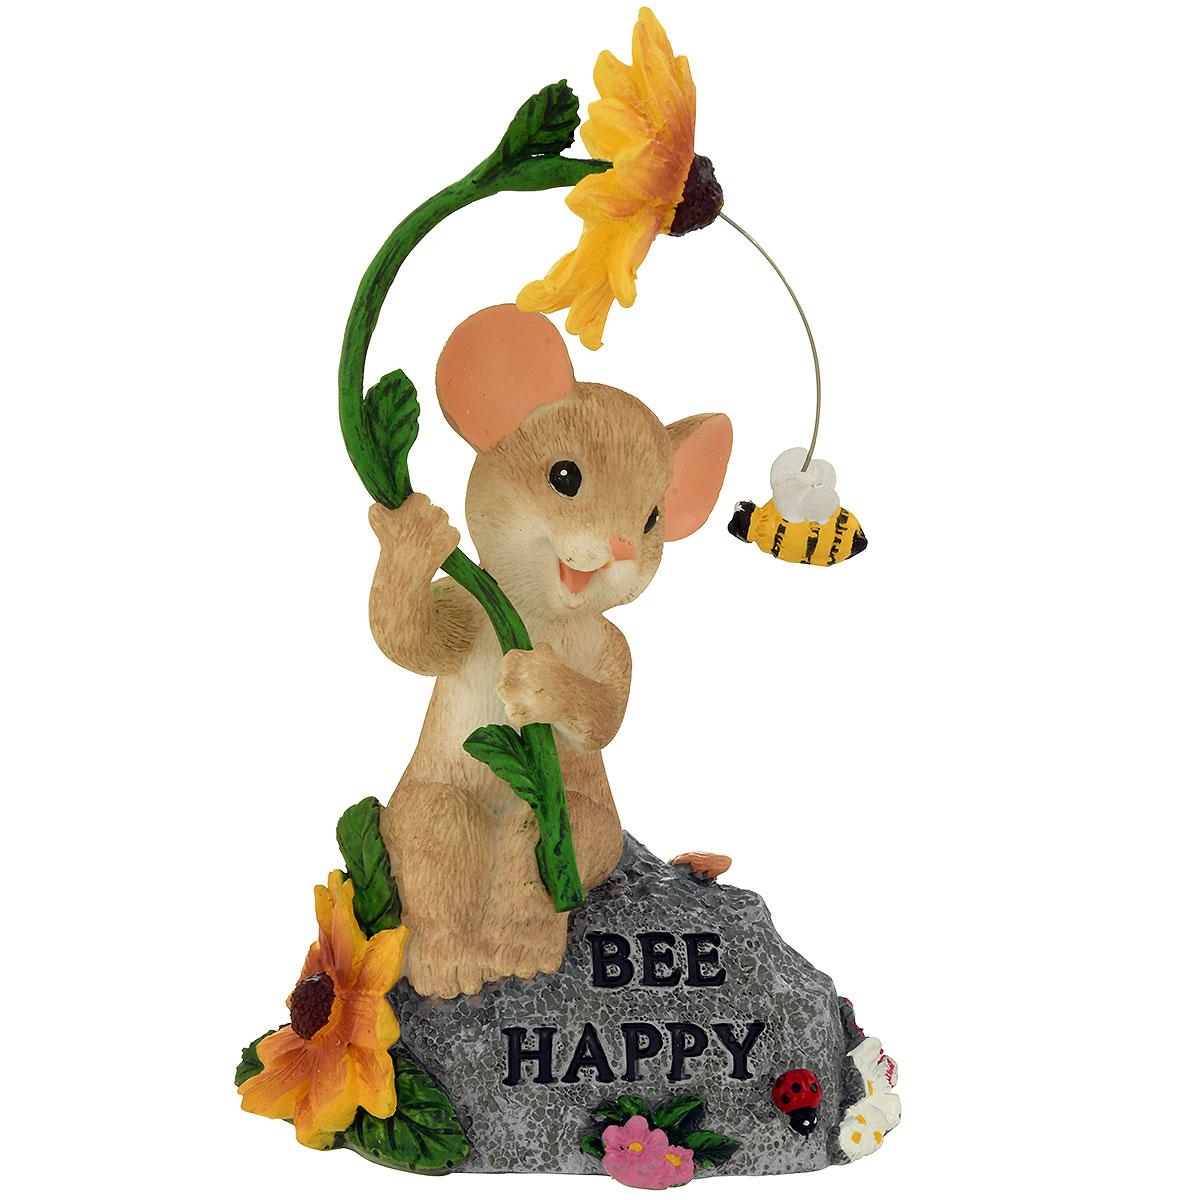 Bee Happy Charming Tails Figurine